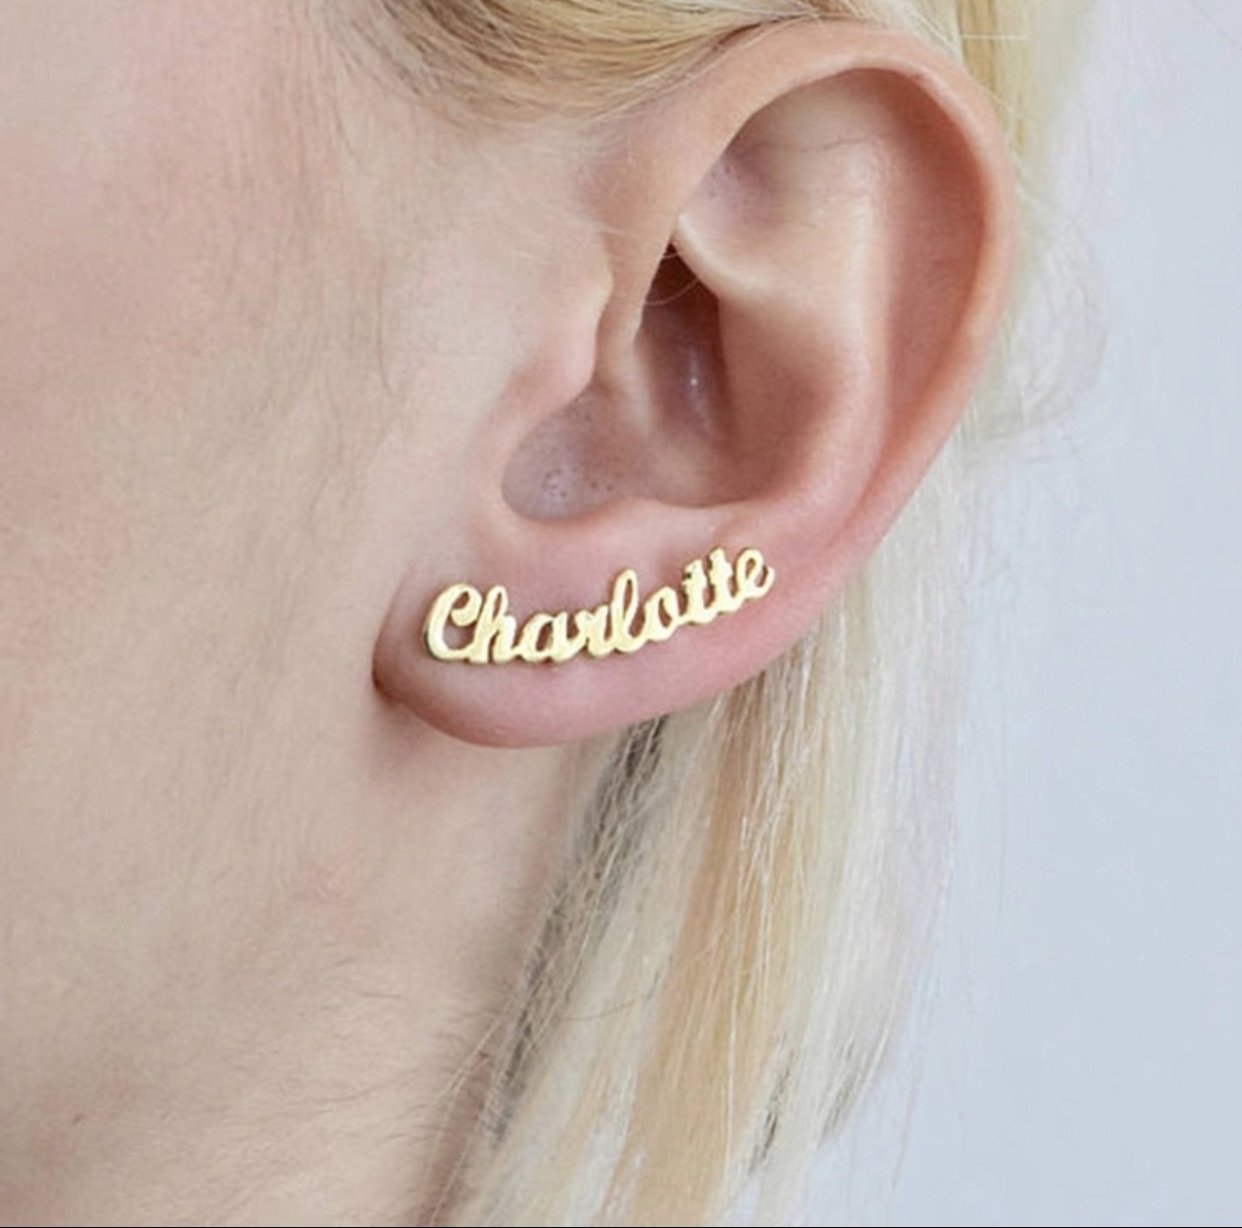 custom earrings